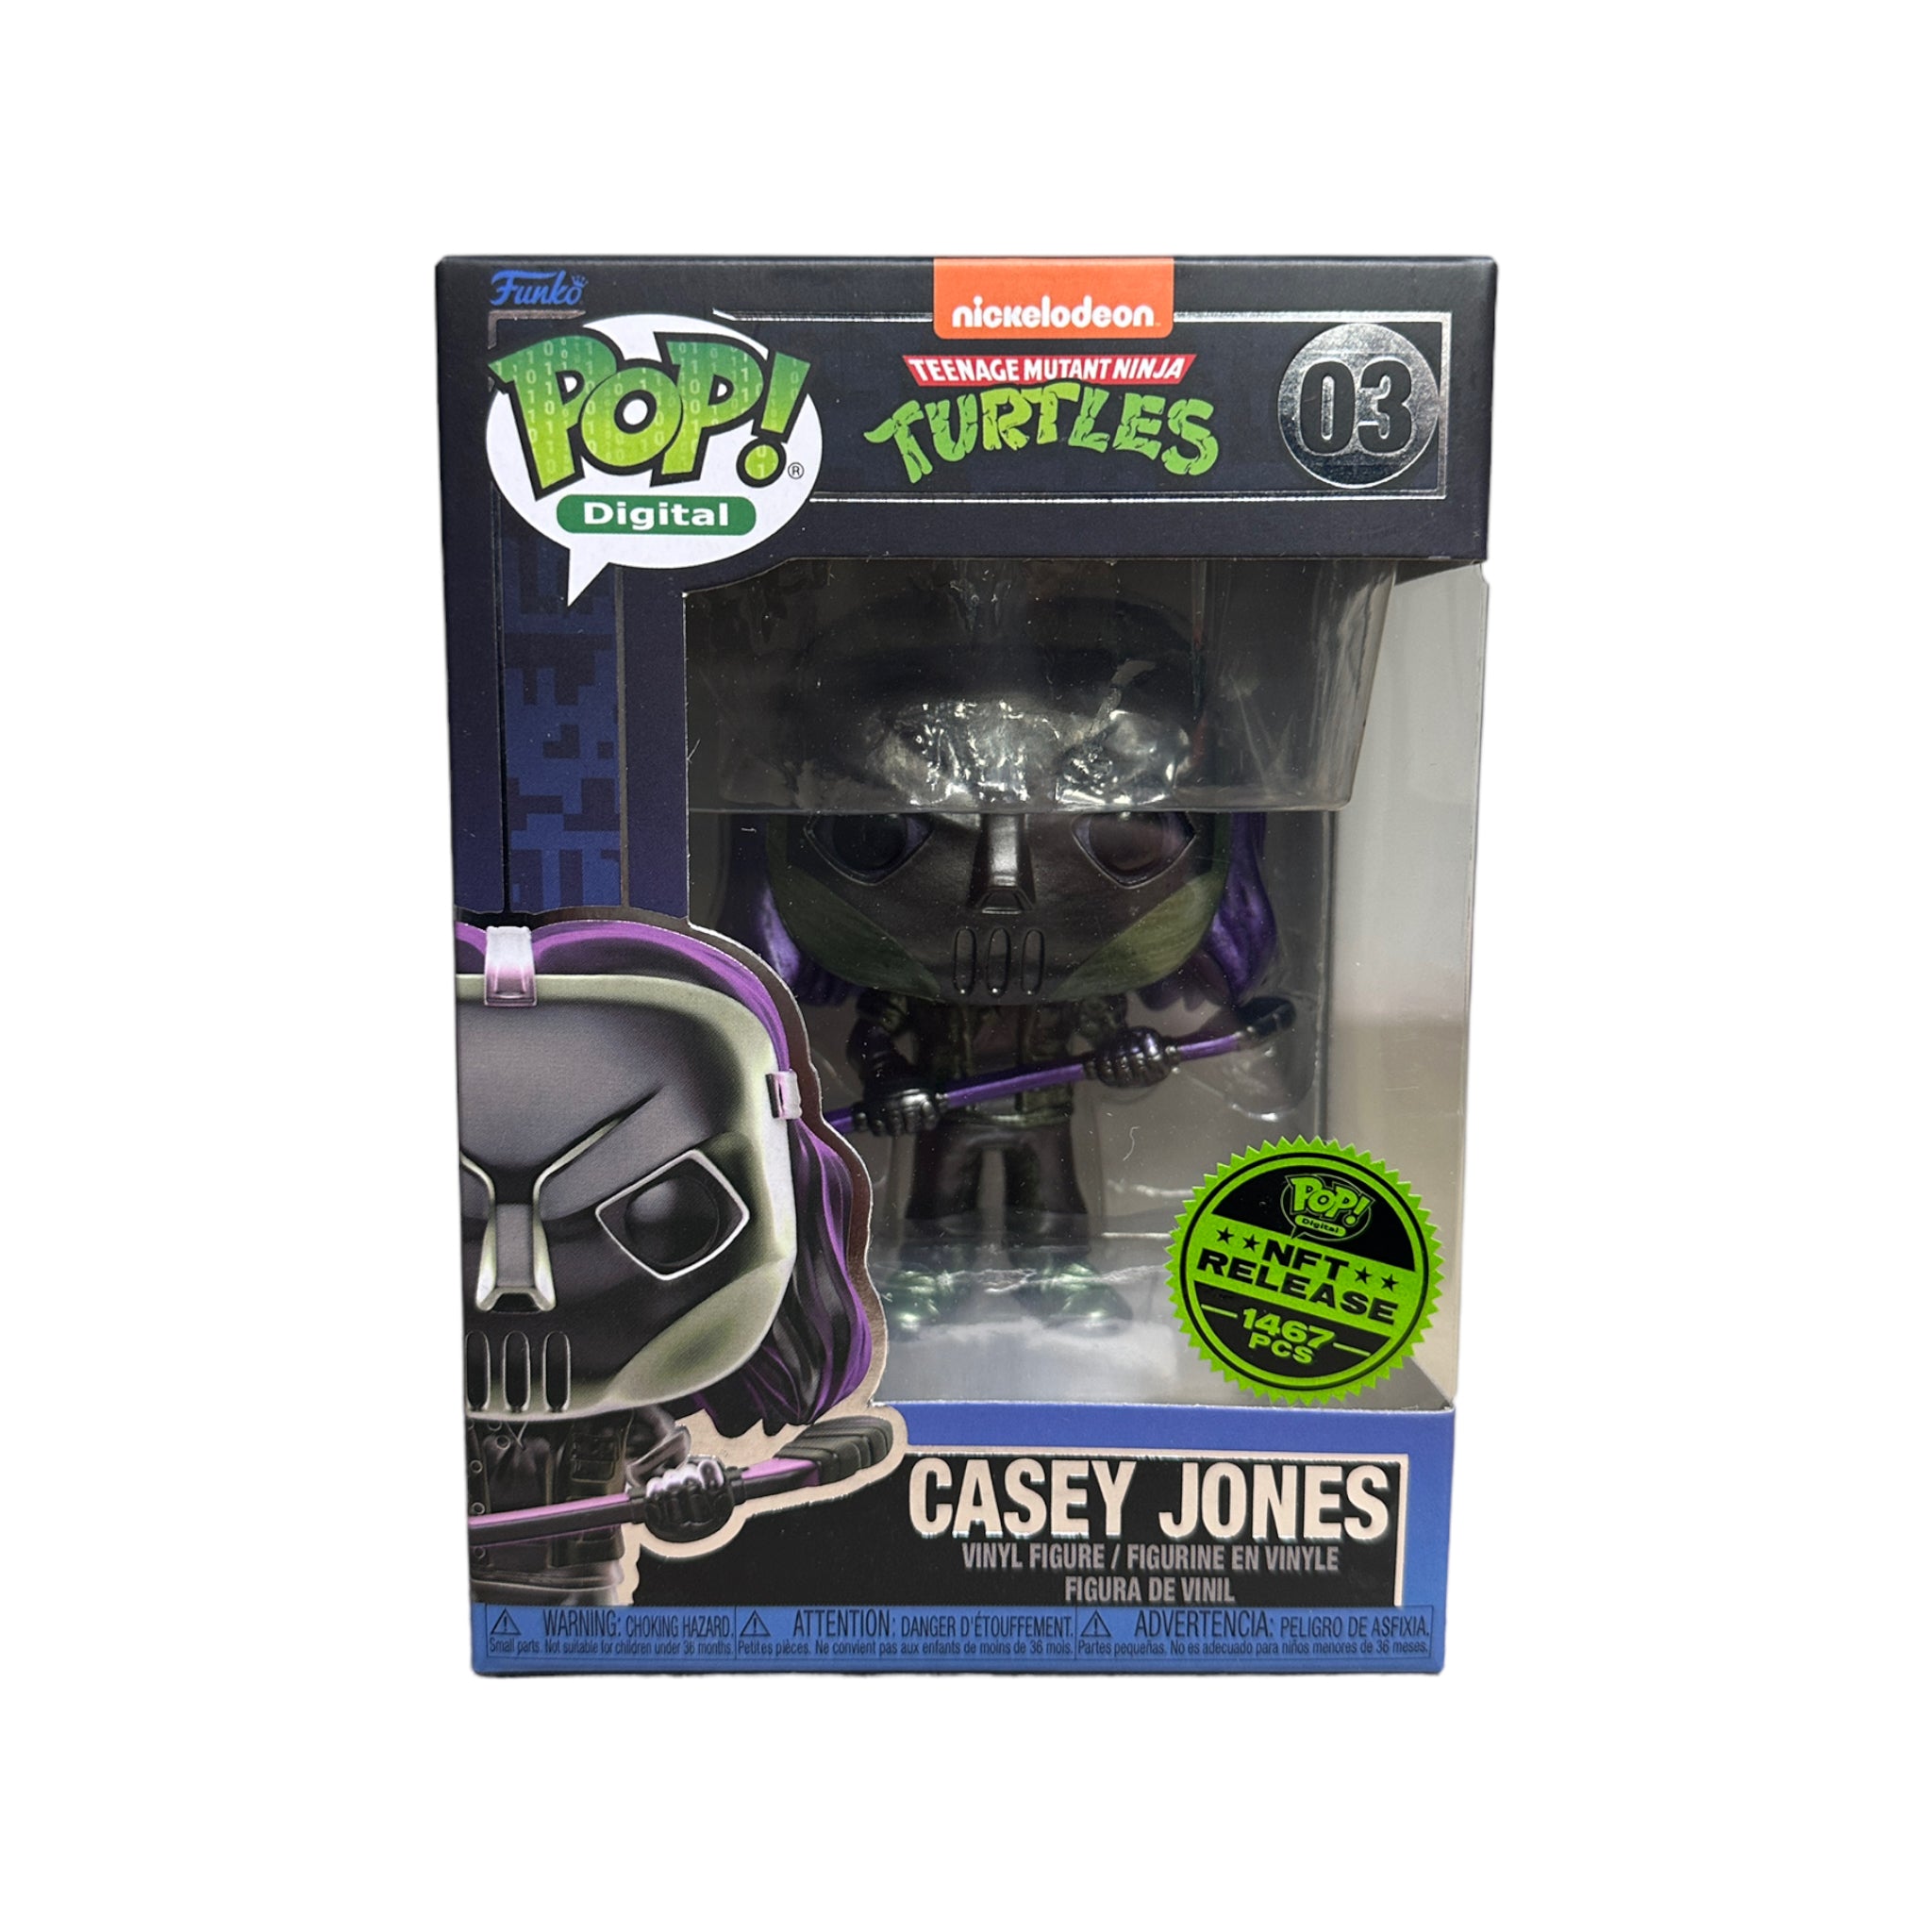 Casey Jones #03 Funko Pop! - Teenage Mutant Ninja Turtles - NFT Release Exclusive LE1467 Pcs - Condition 9.5/10